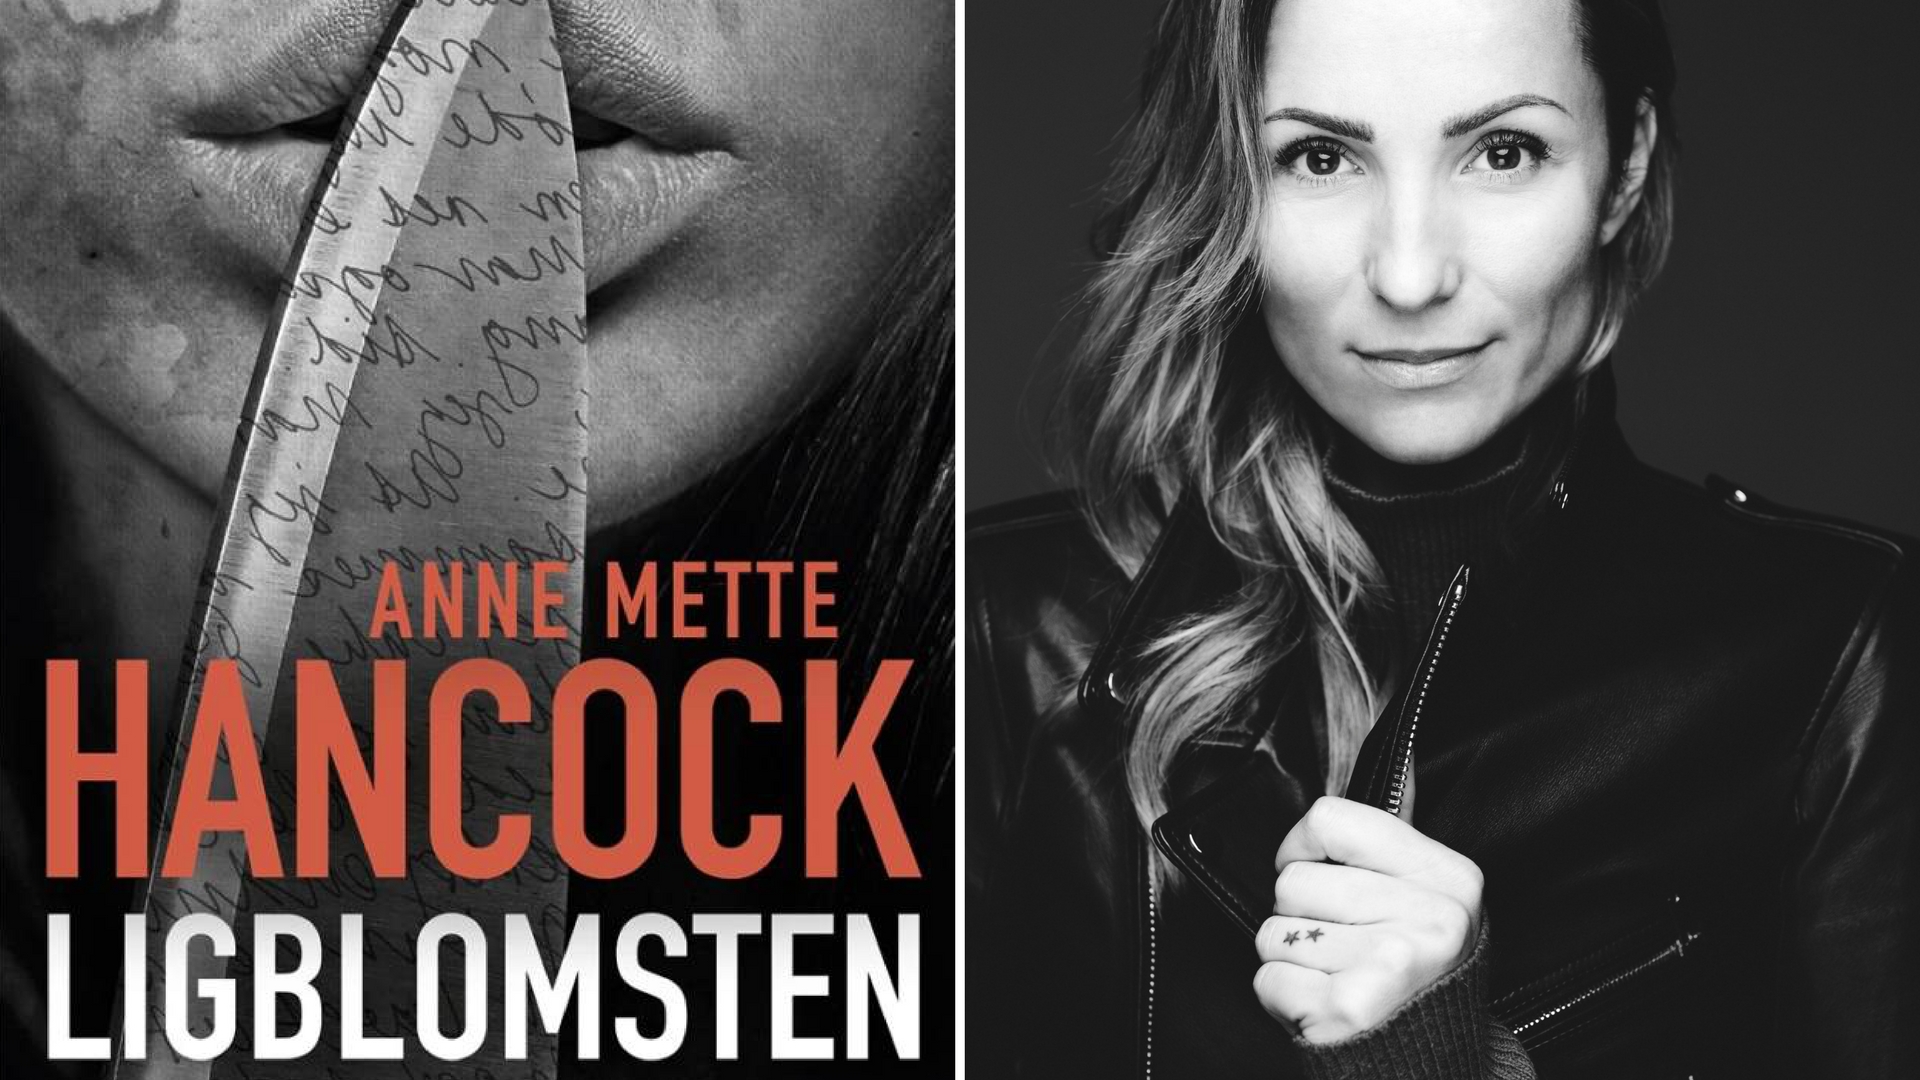 Anne Mette Hancock er årets danske krimifund